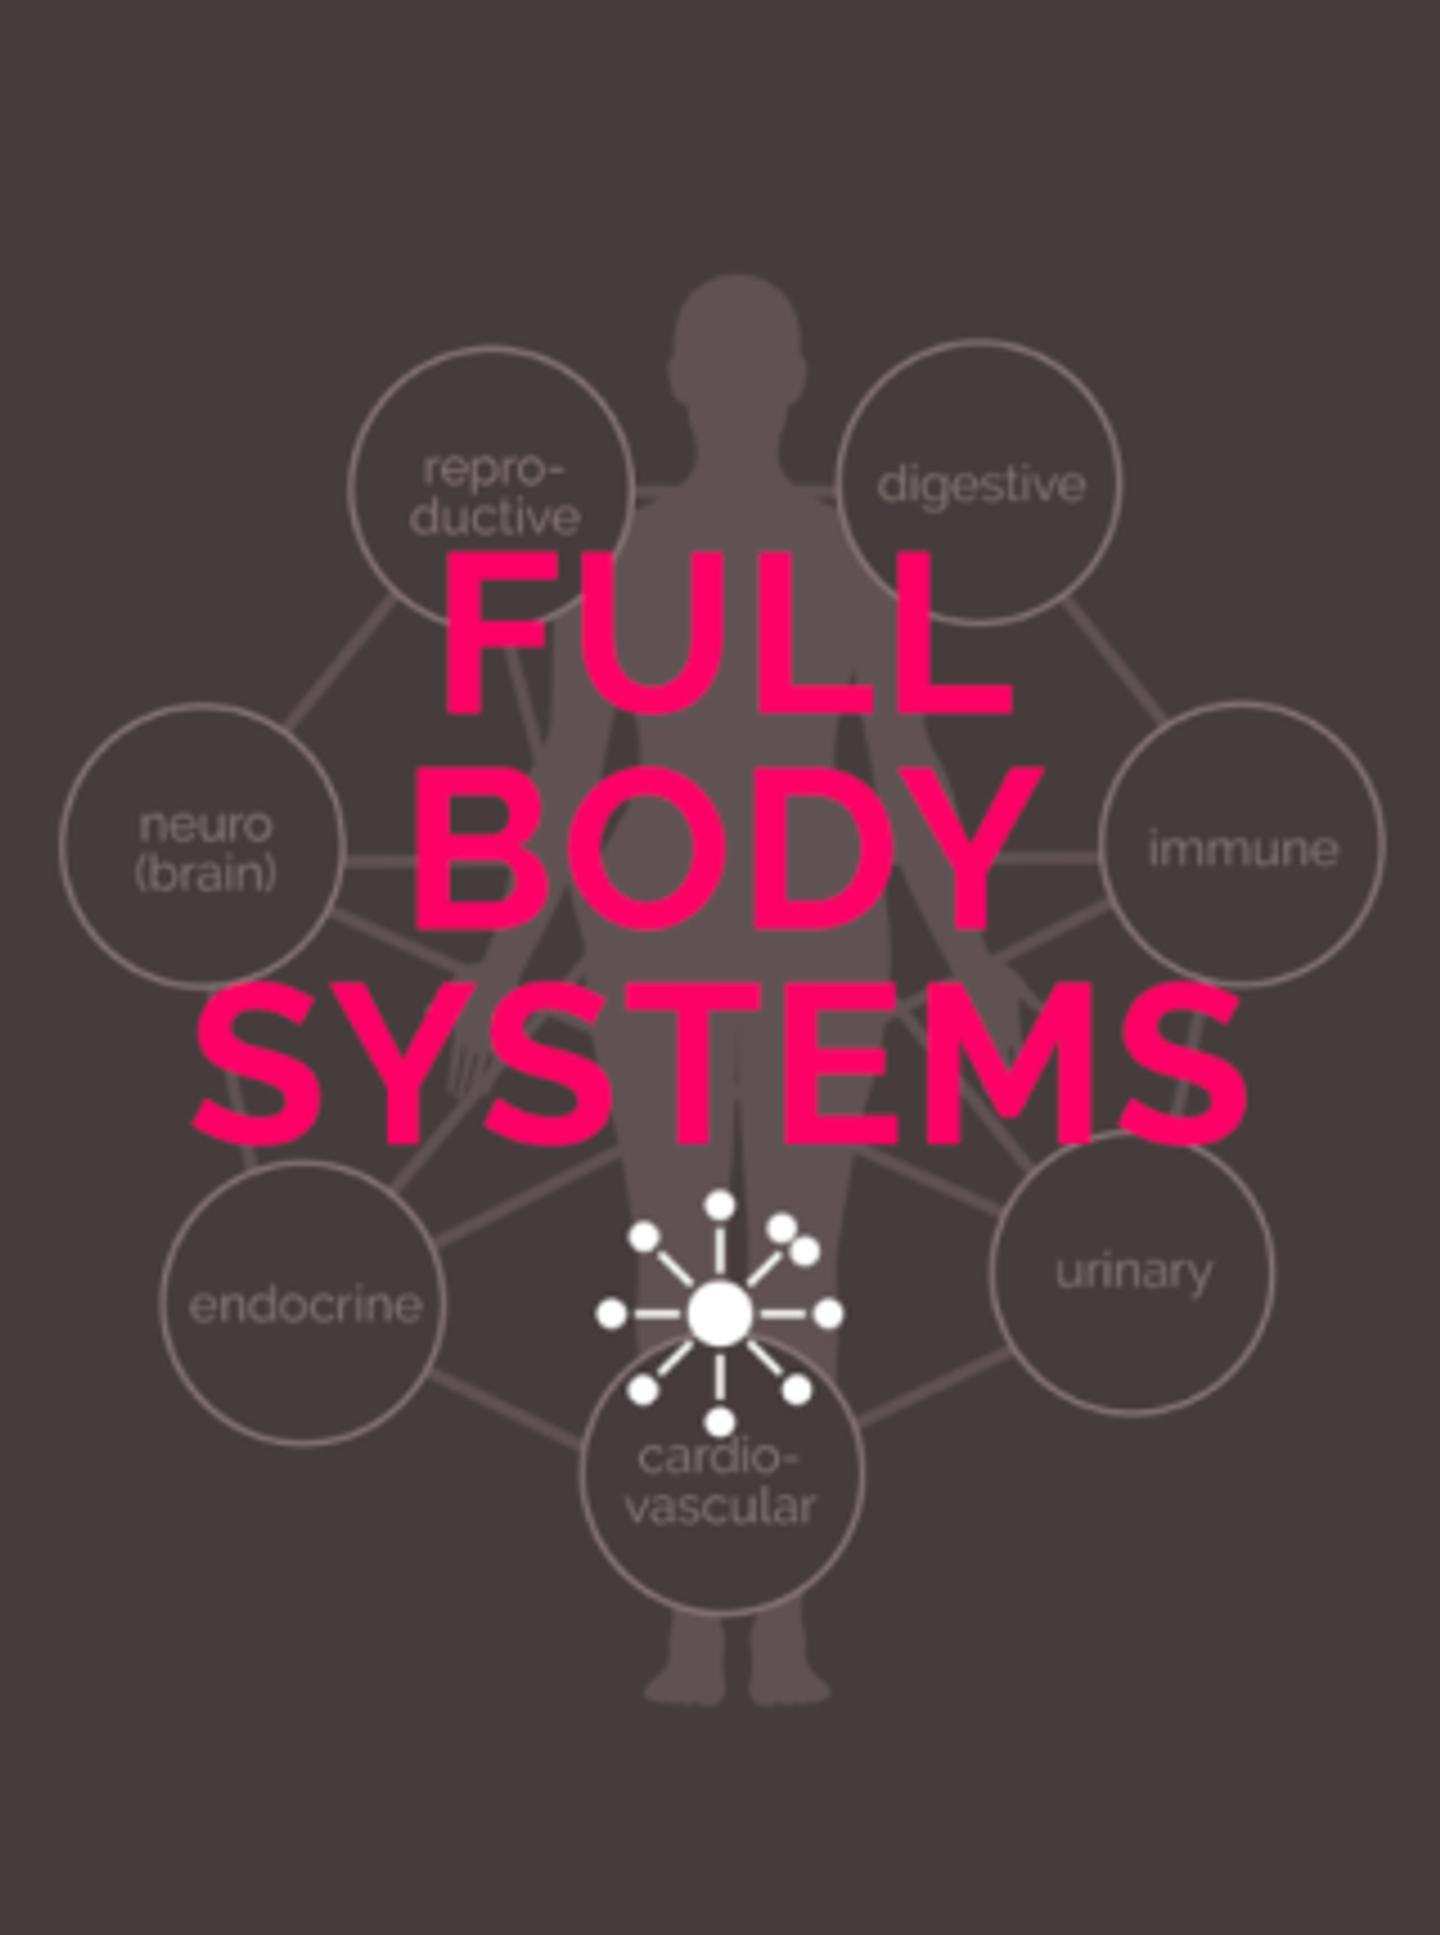 full-body-systems-320x430-1